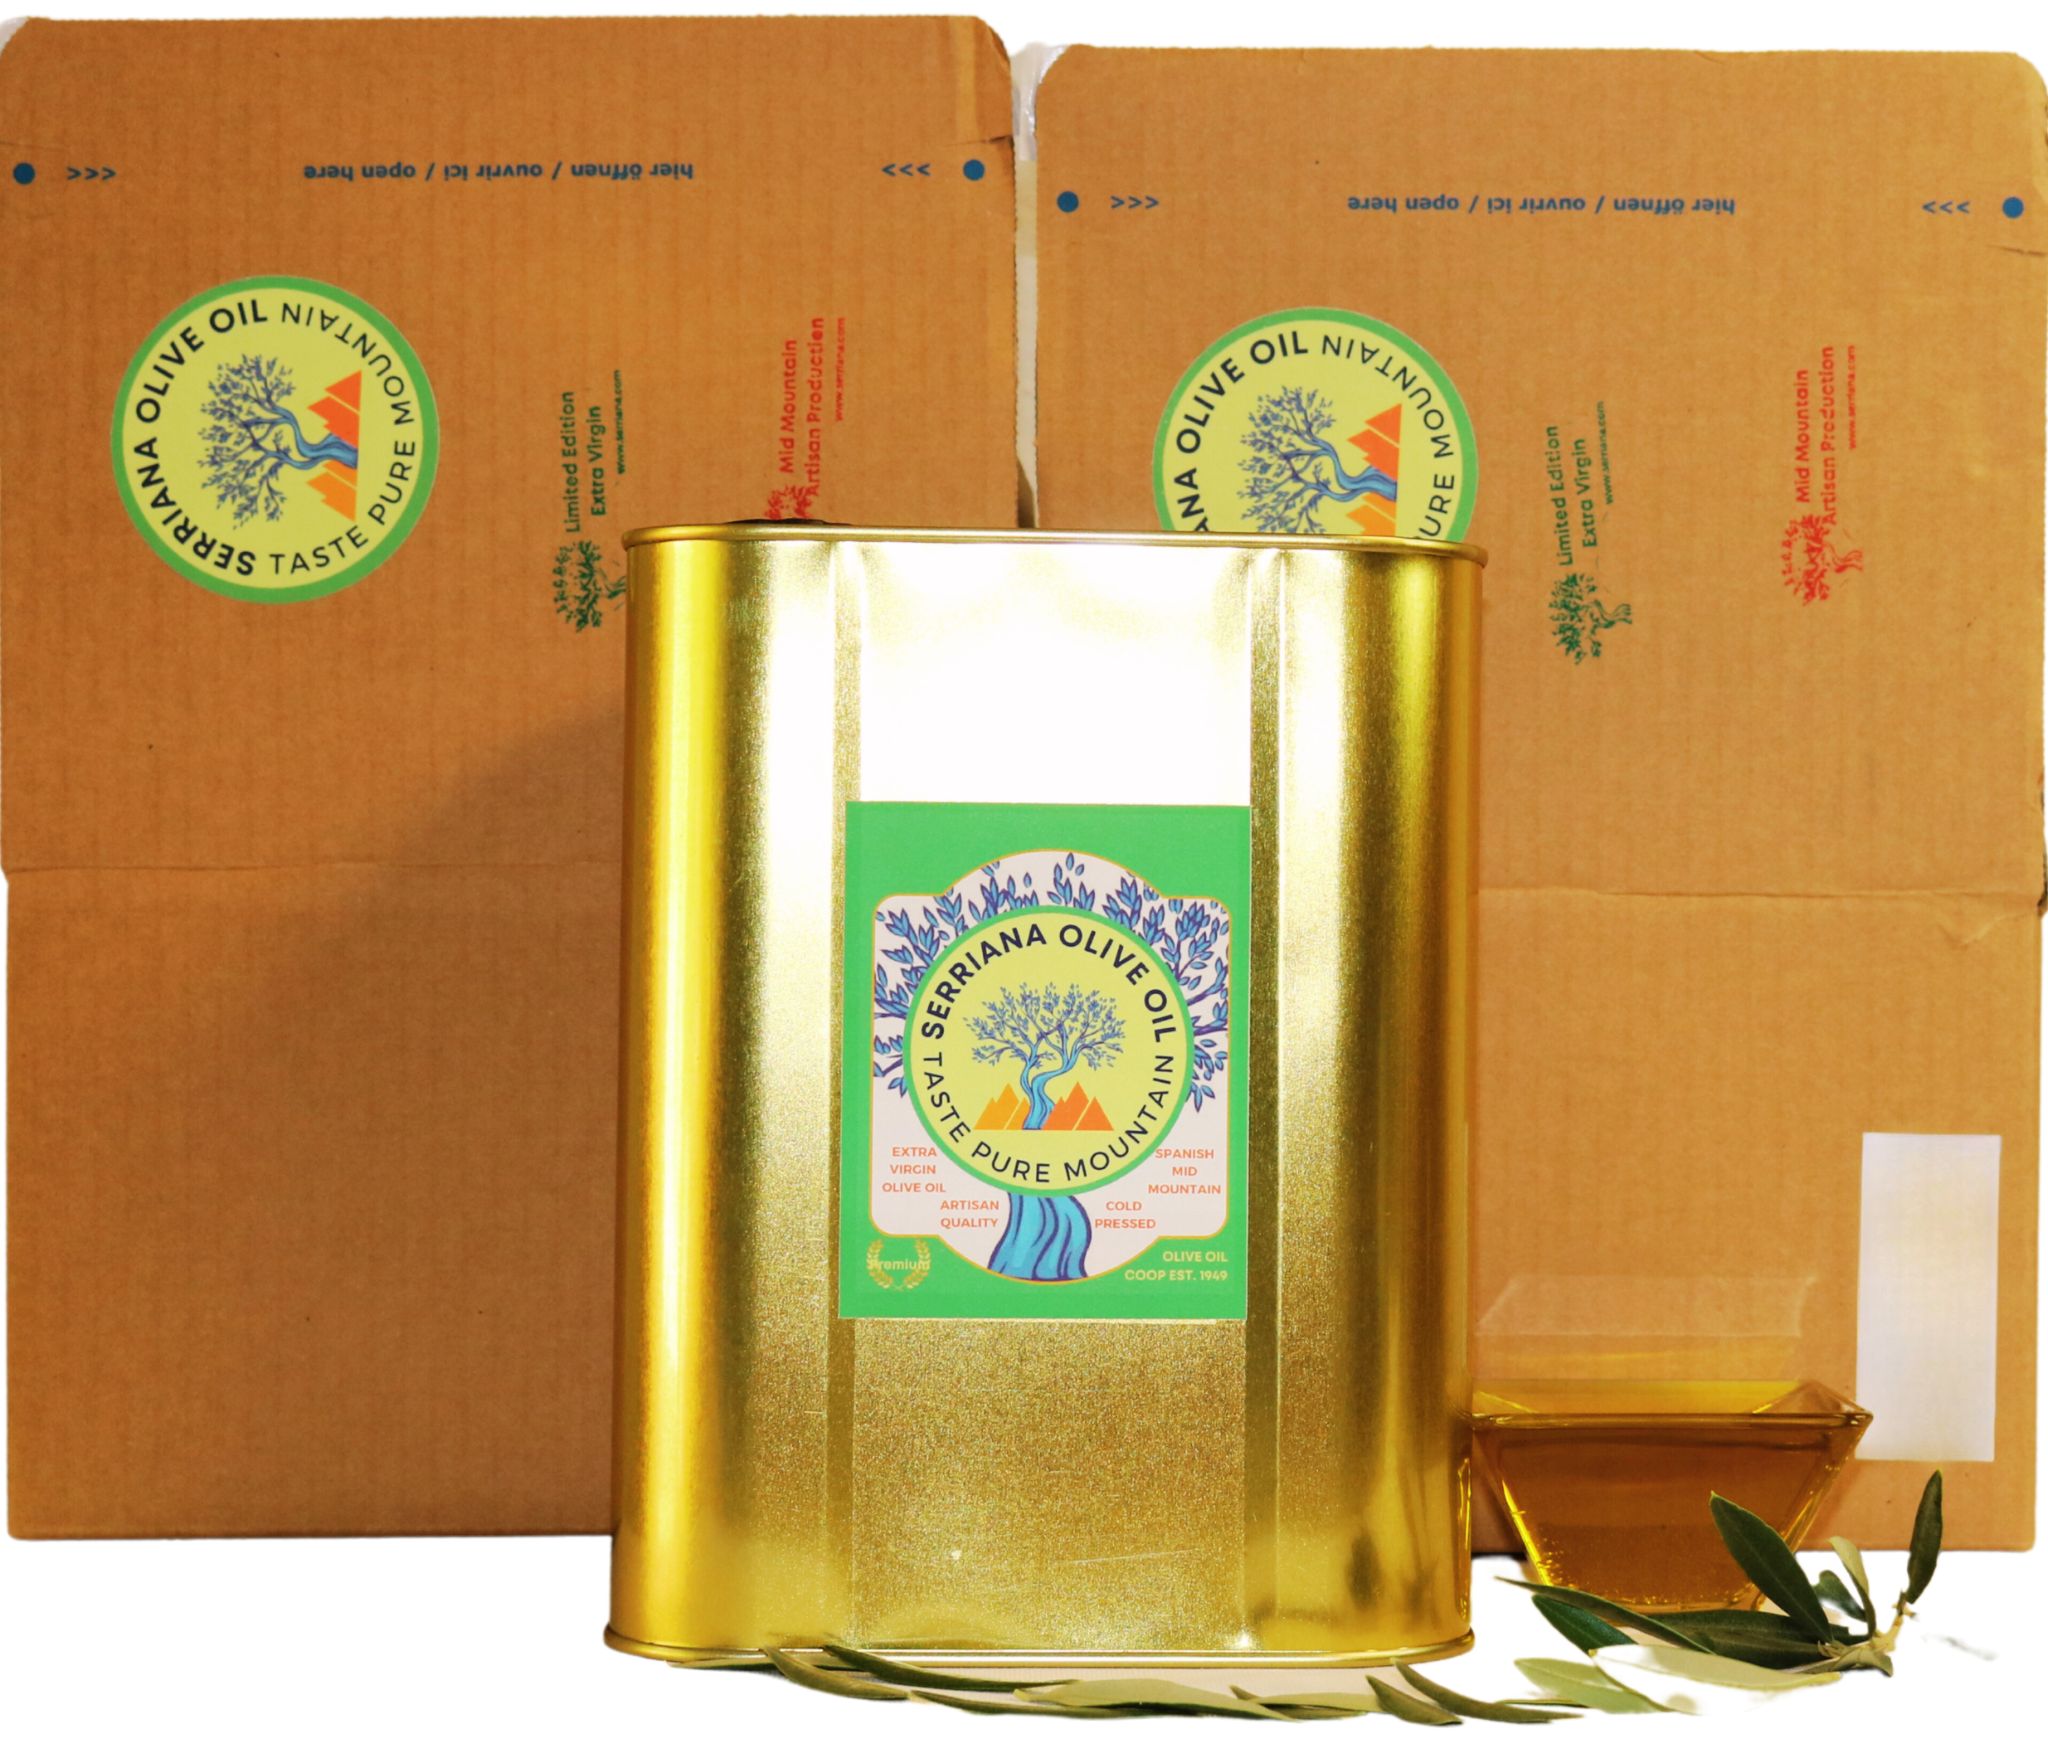 serriana olive oil 3 litre can gift box